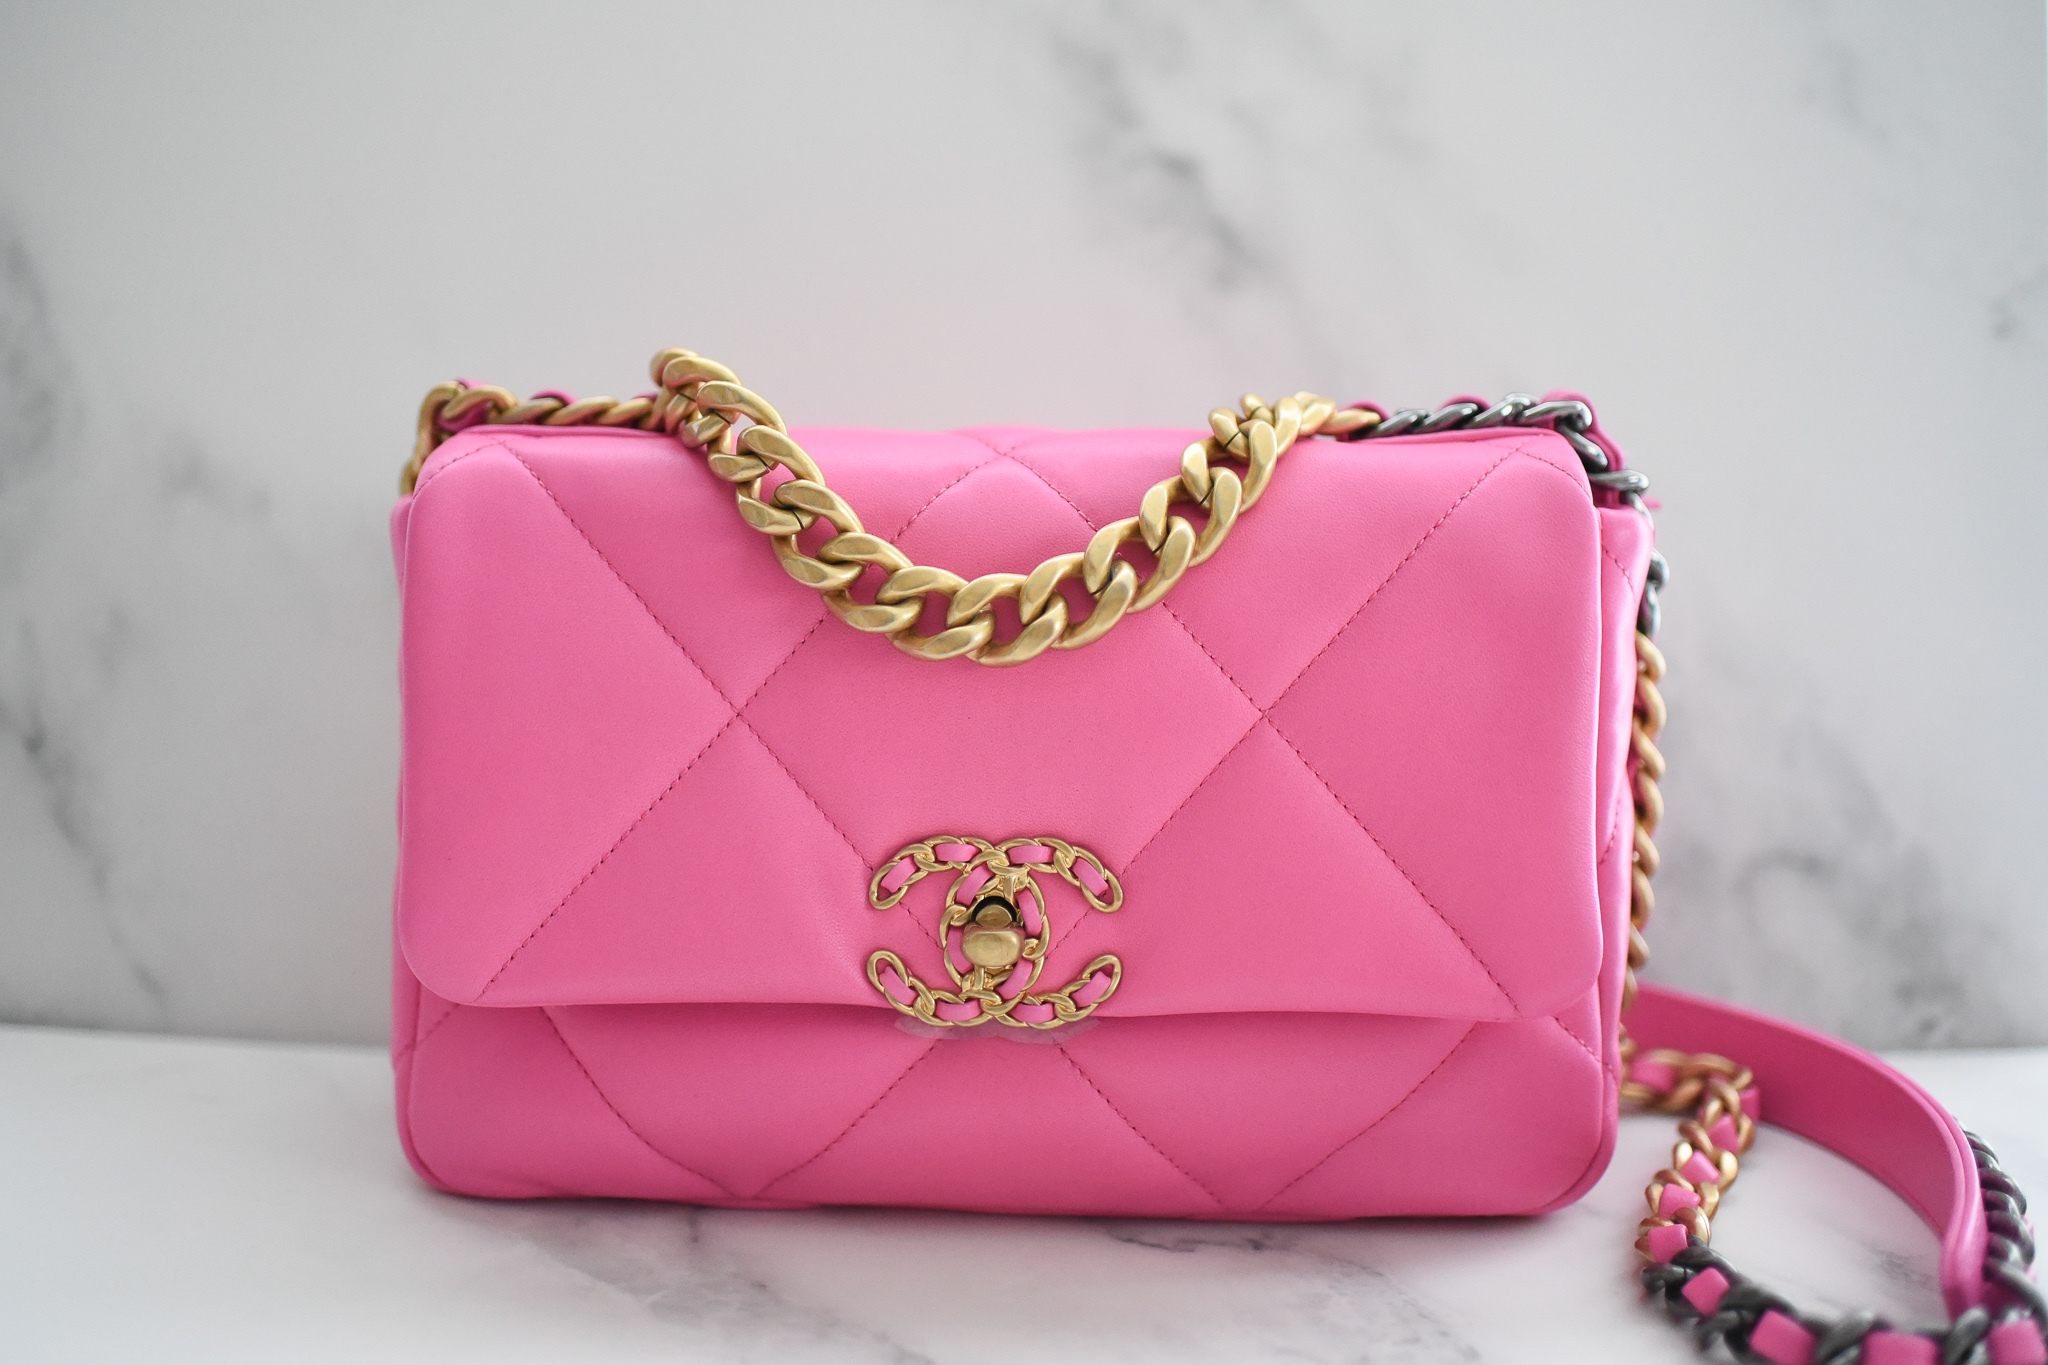 Chanel 19 Medium (Small), 21S Neon Hot Pink, New in Box GA001